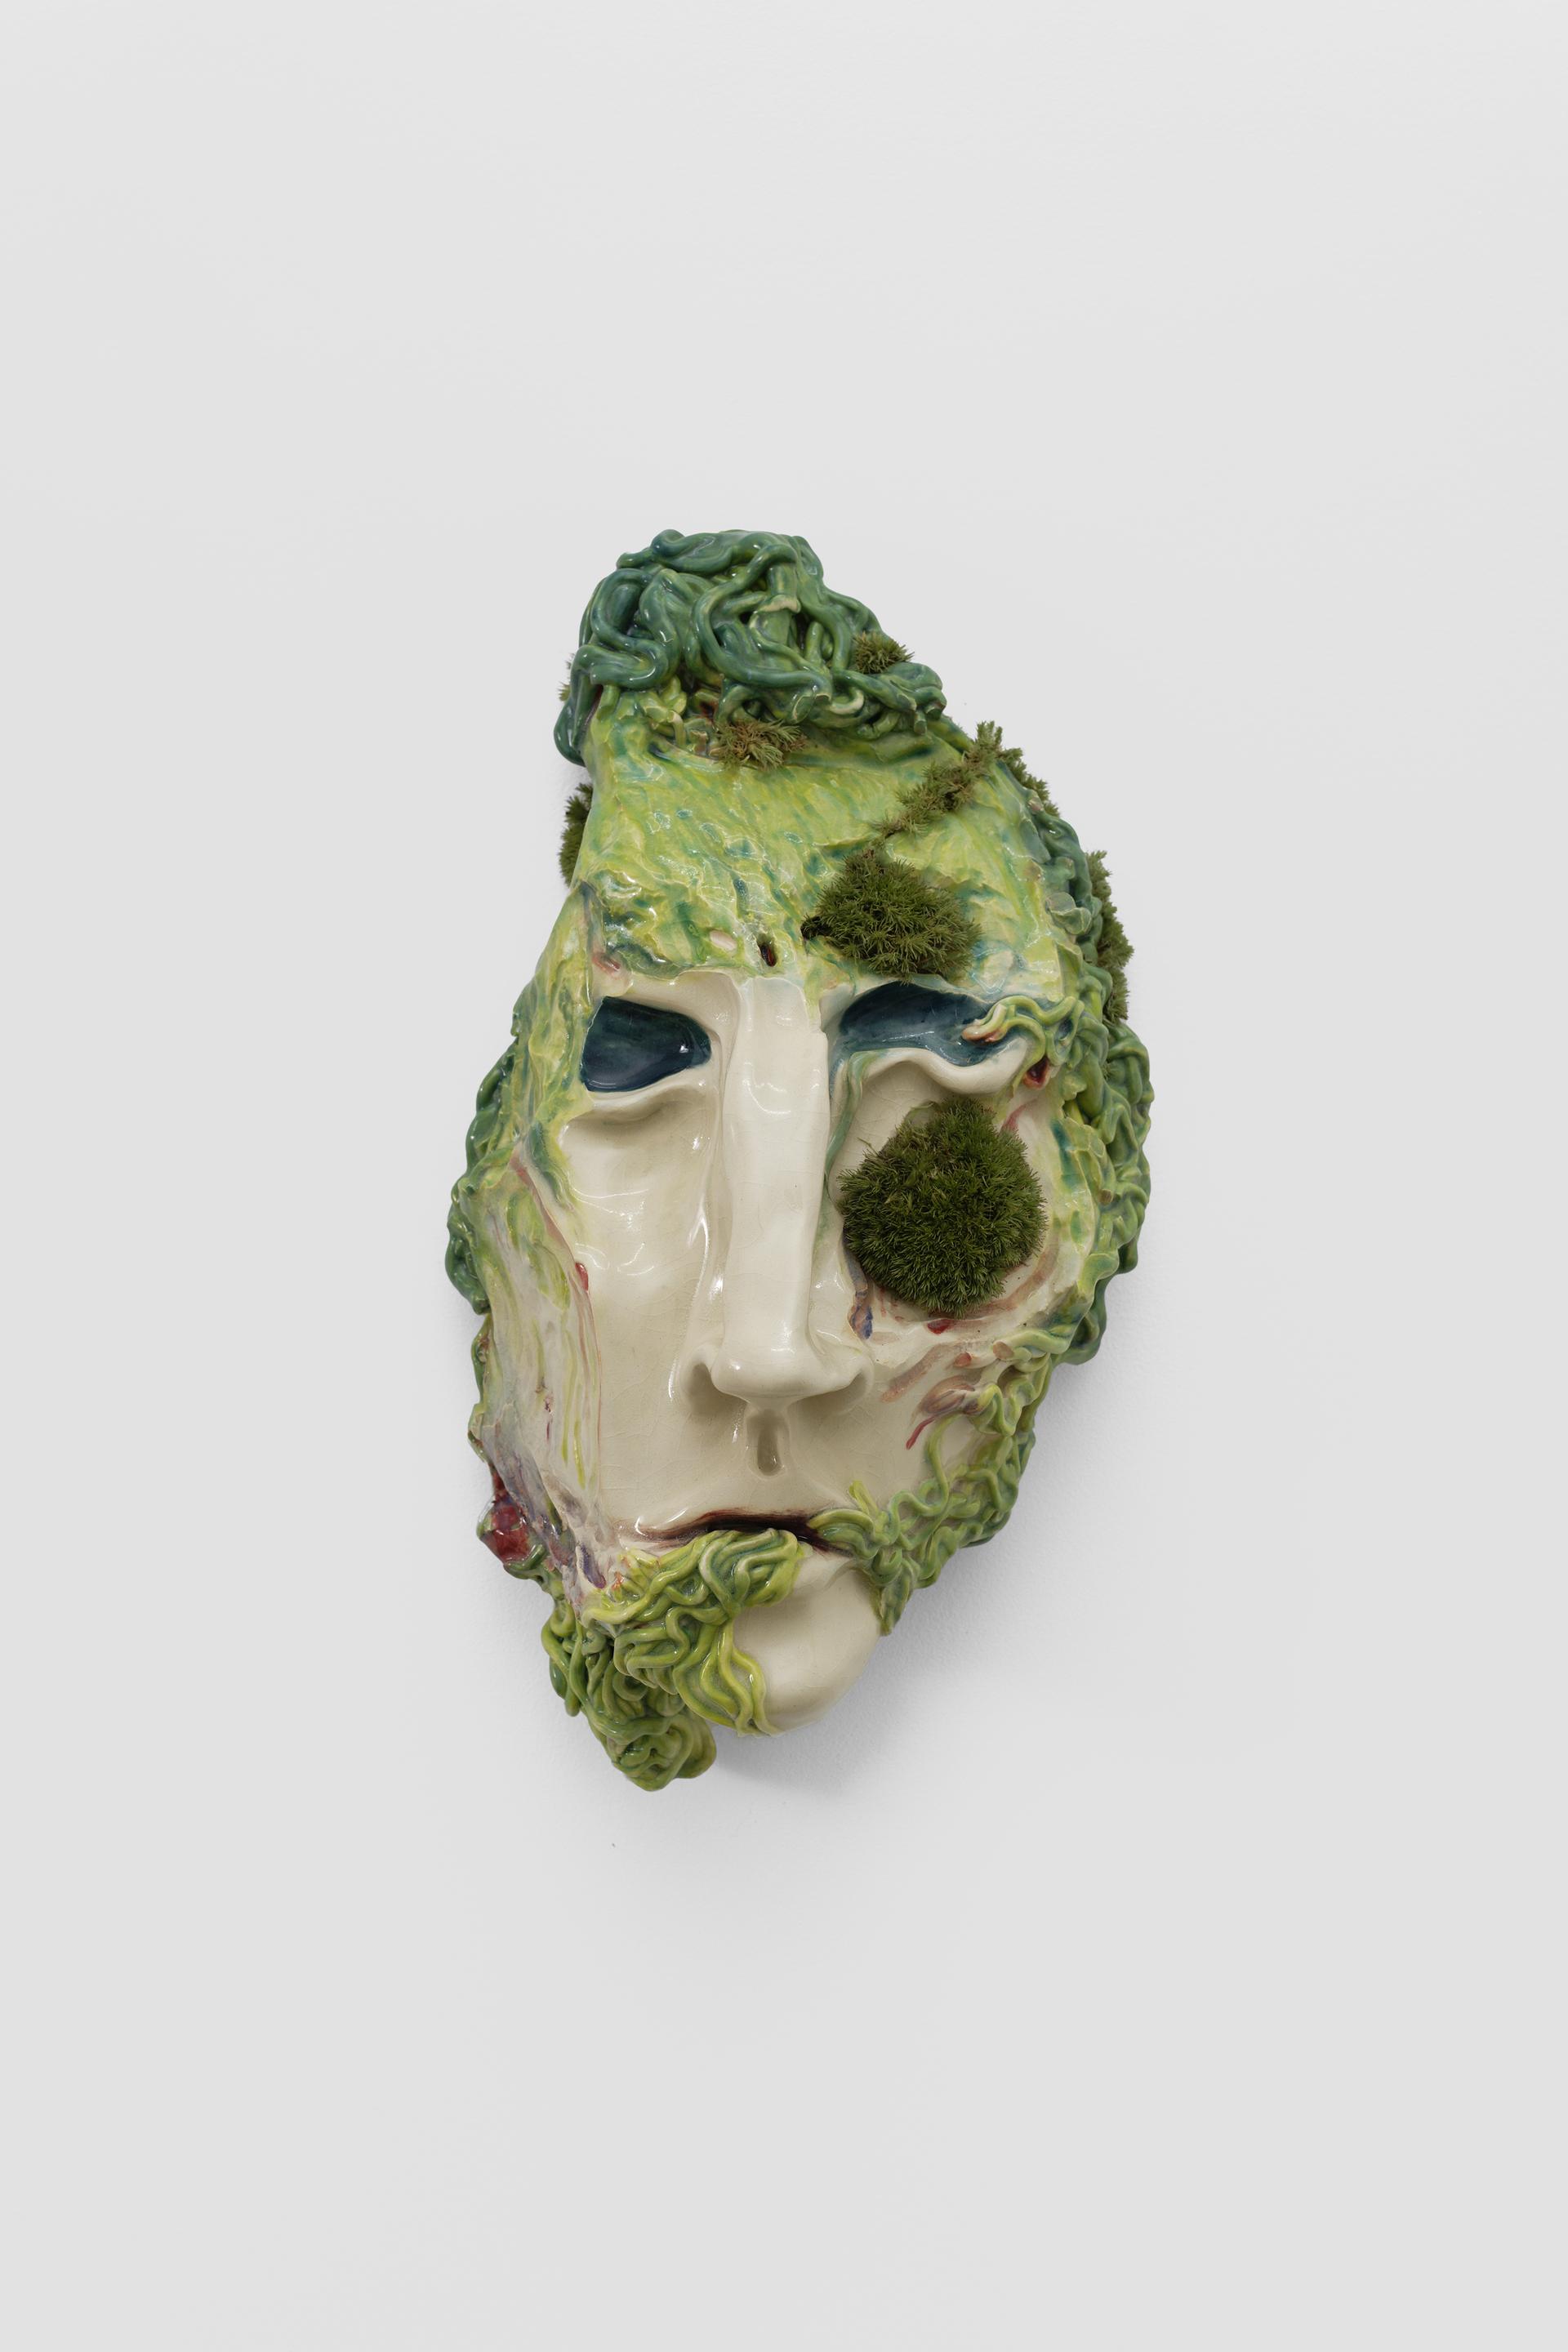  Zoe Williams   “Algol’s Confidant”, 2021   glazed ceramic, living moss, 40 x 23 x 18 cm   Courtesy of theartist and Ciaccia Levi, Paris-Milan